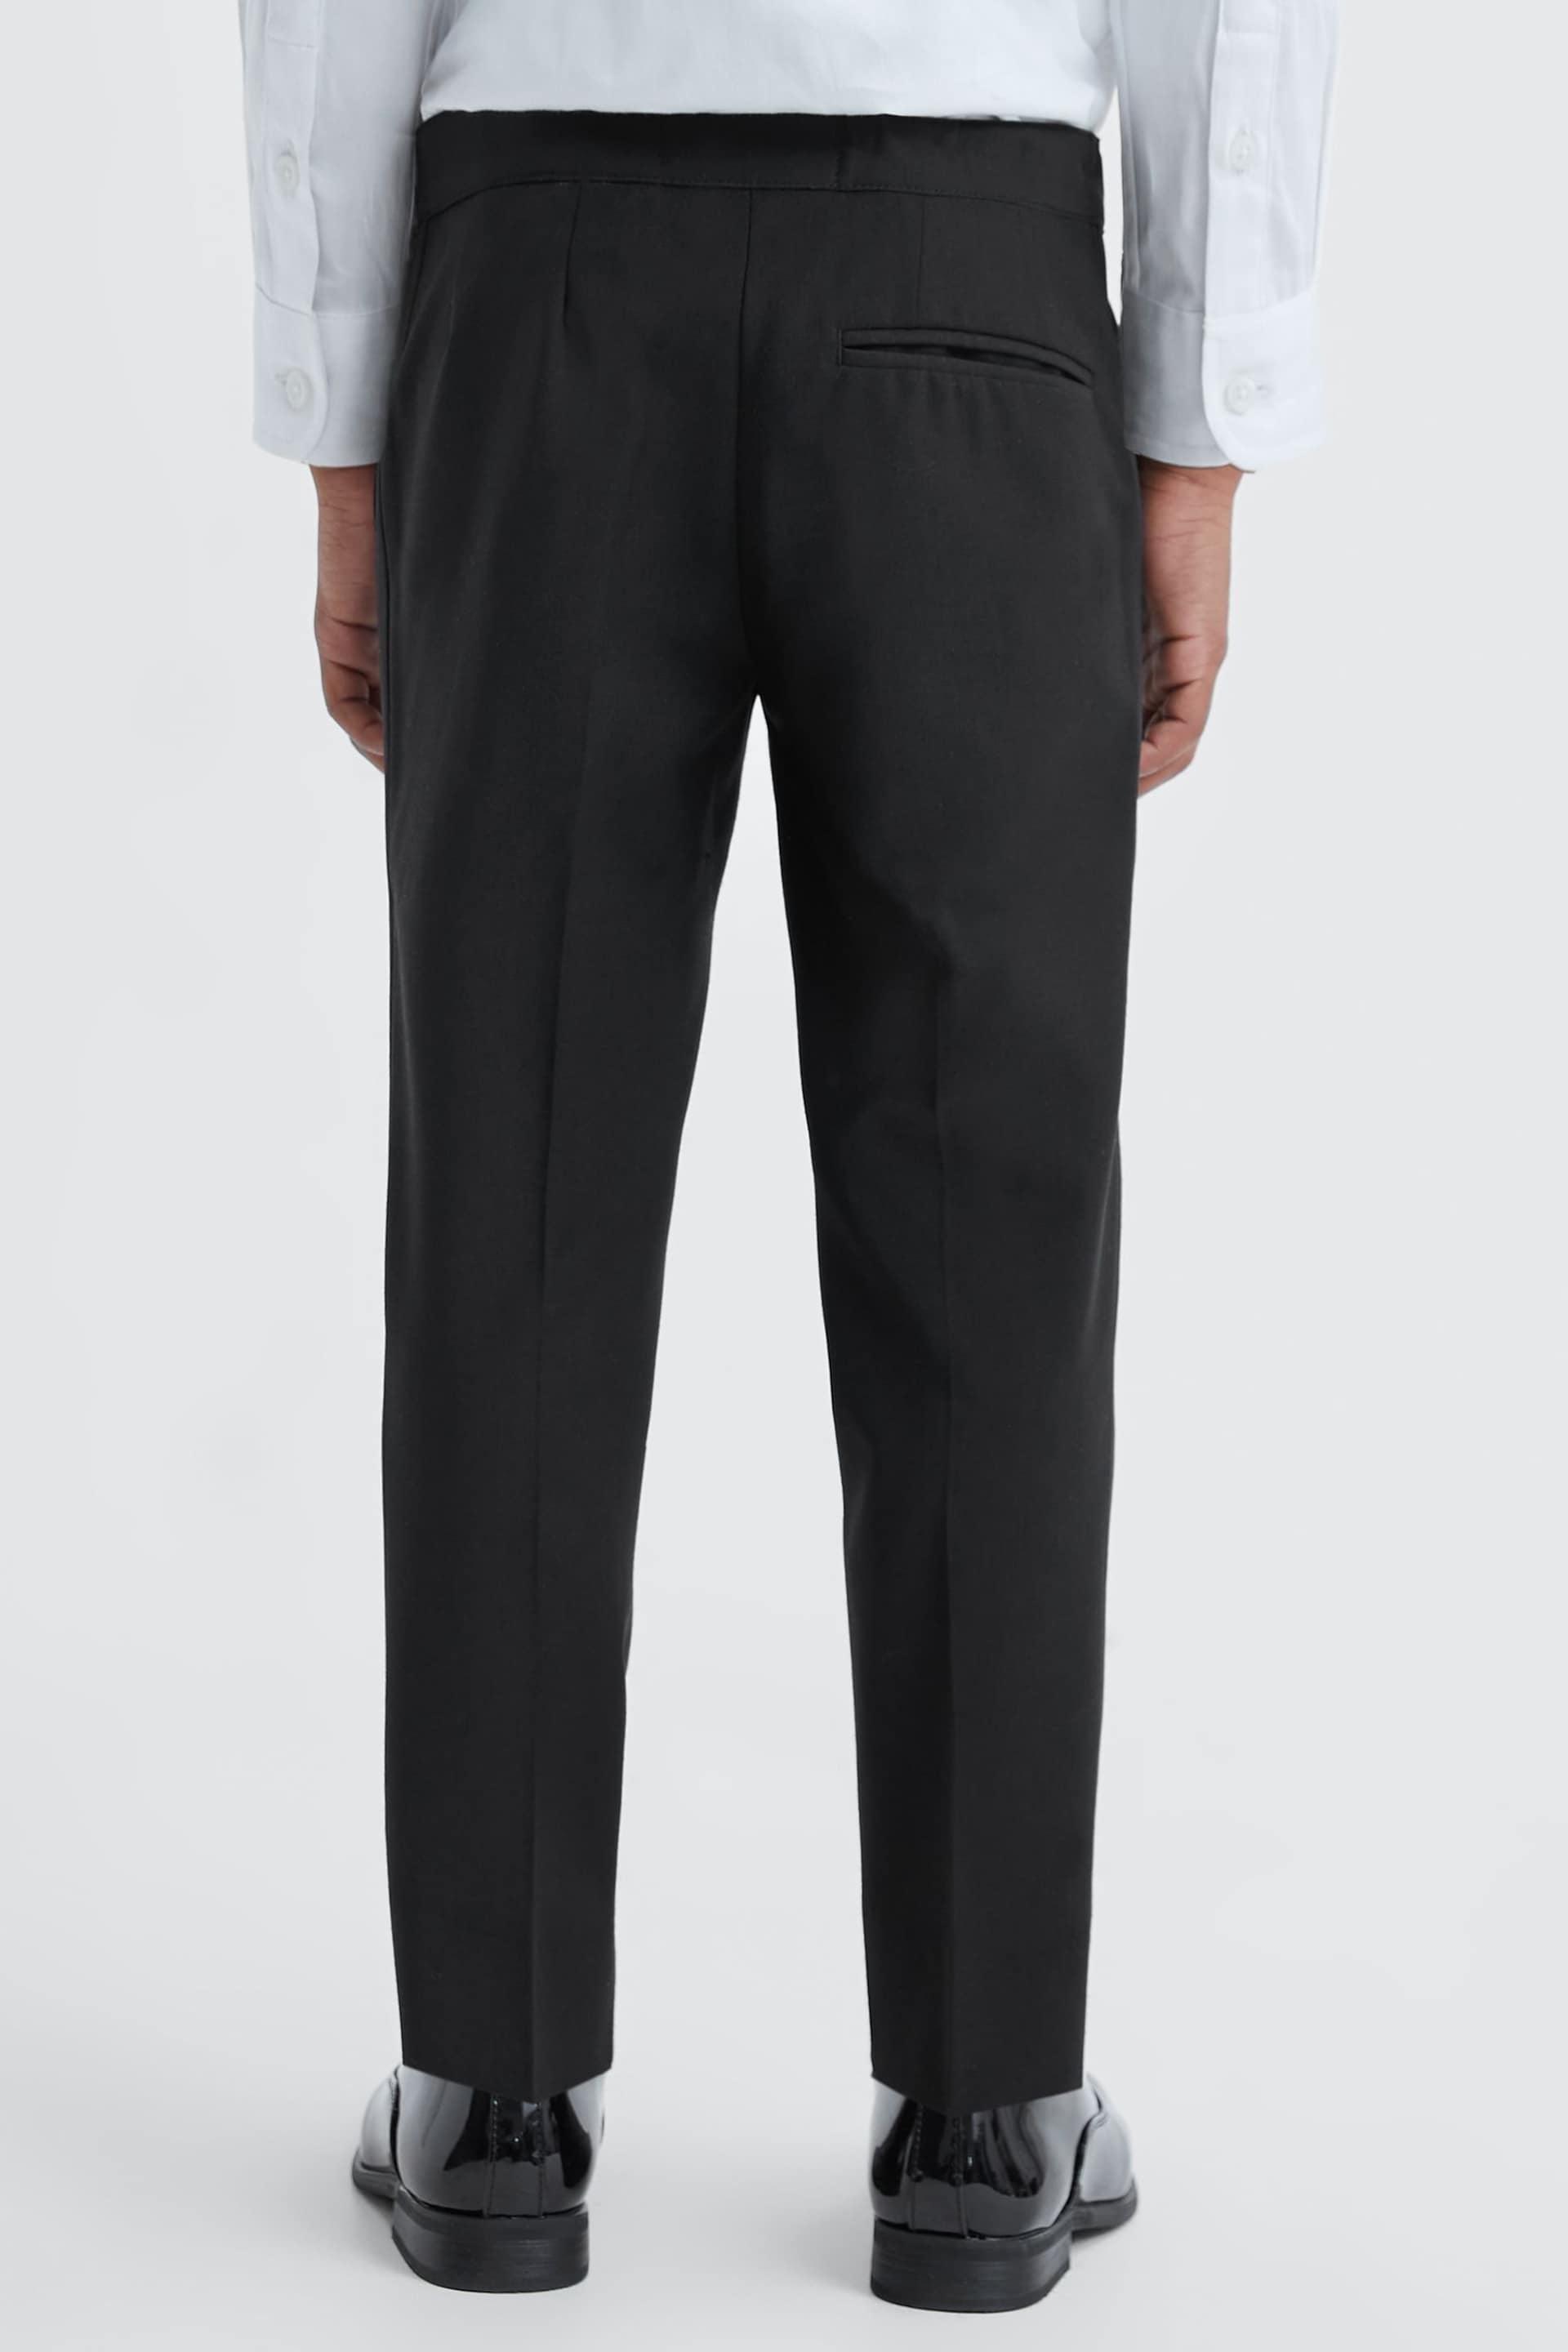 Reiss Black Knightsbridge Junior Tuxedo Trousers - Image 5 of 6